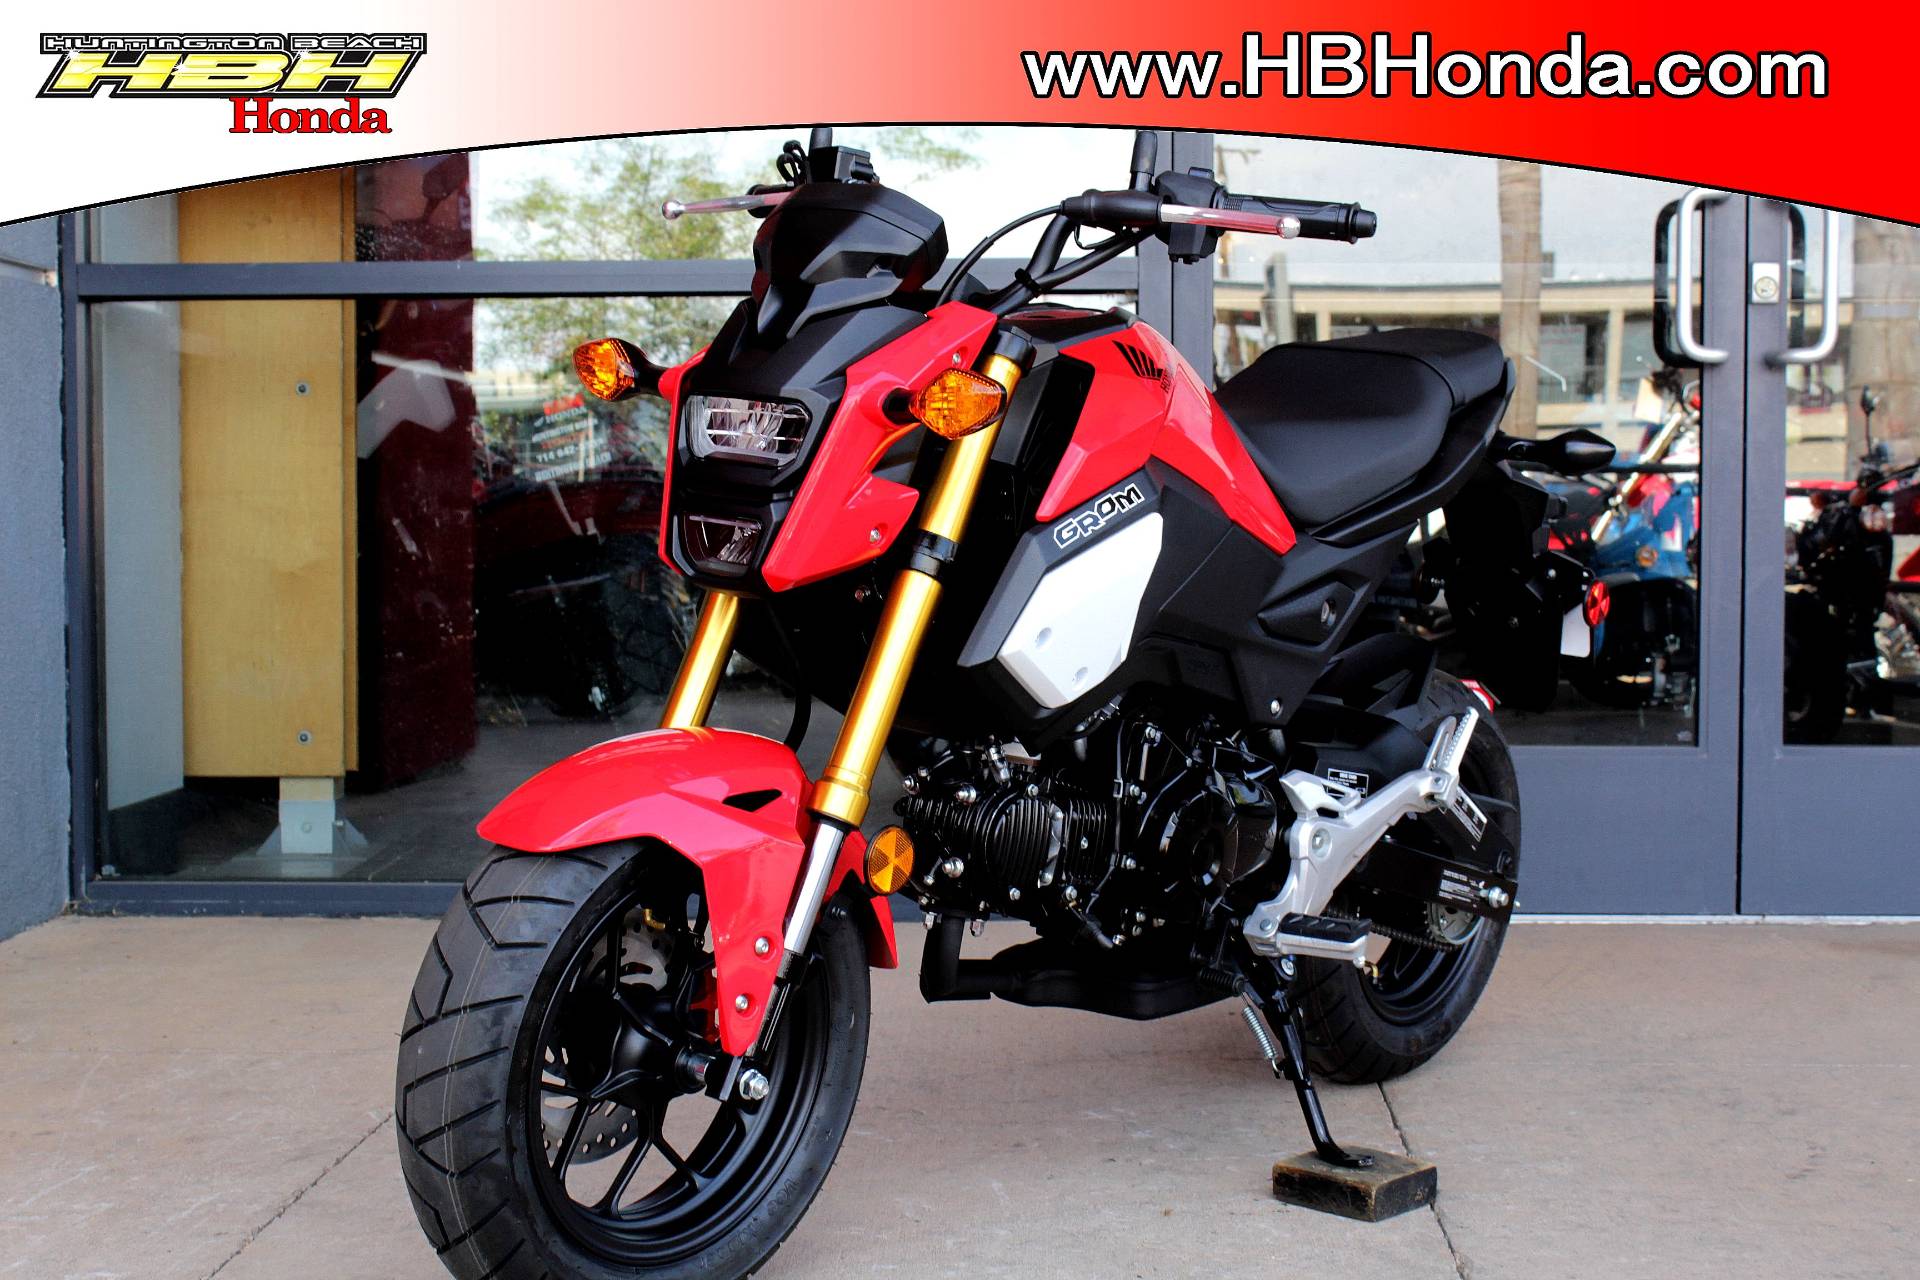 New Honda Grom Abs For Sale 2020 Cherry Red Motorcycles In Huntington Beach Ca Huntington Beach Honda M3223 0952